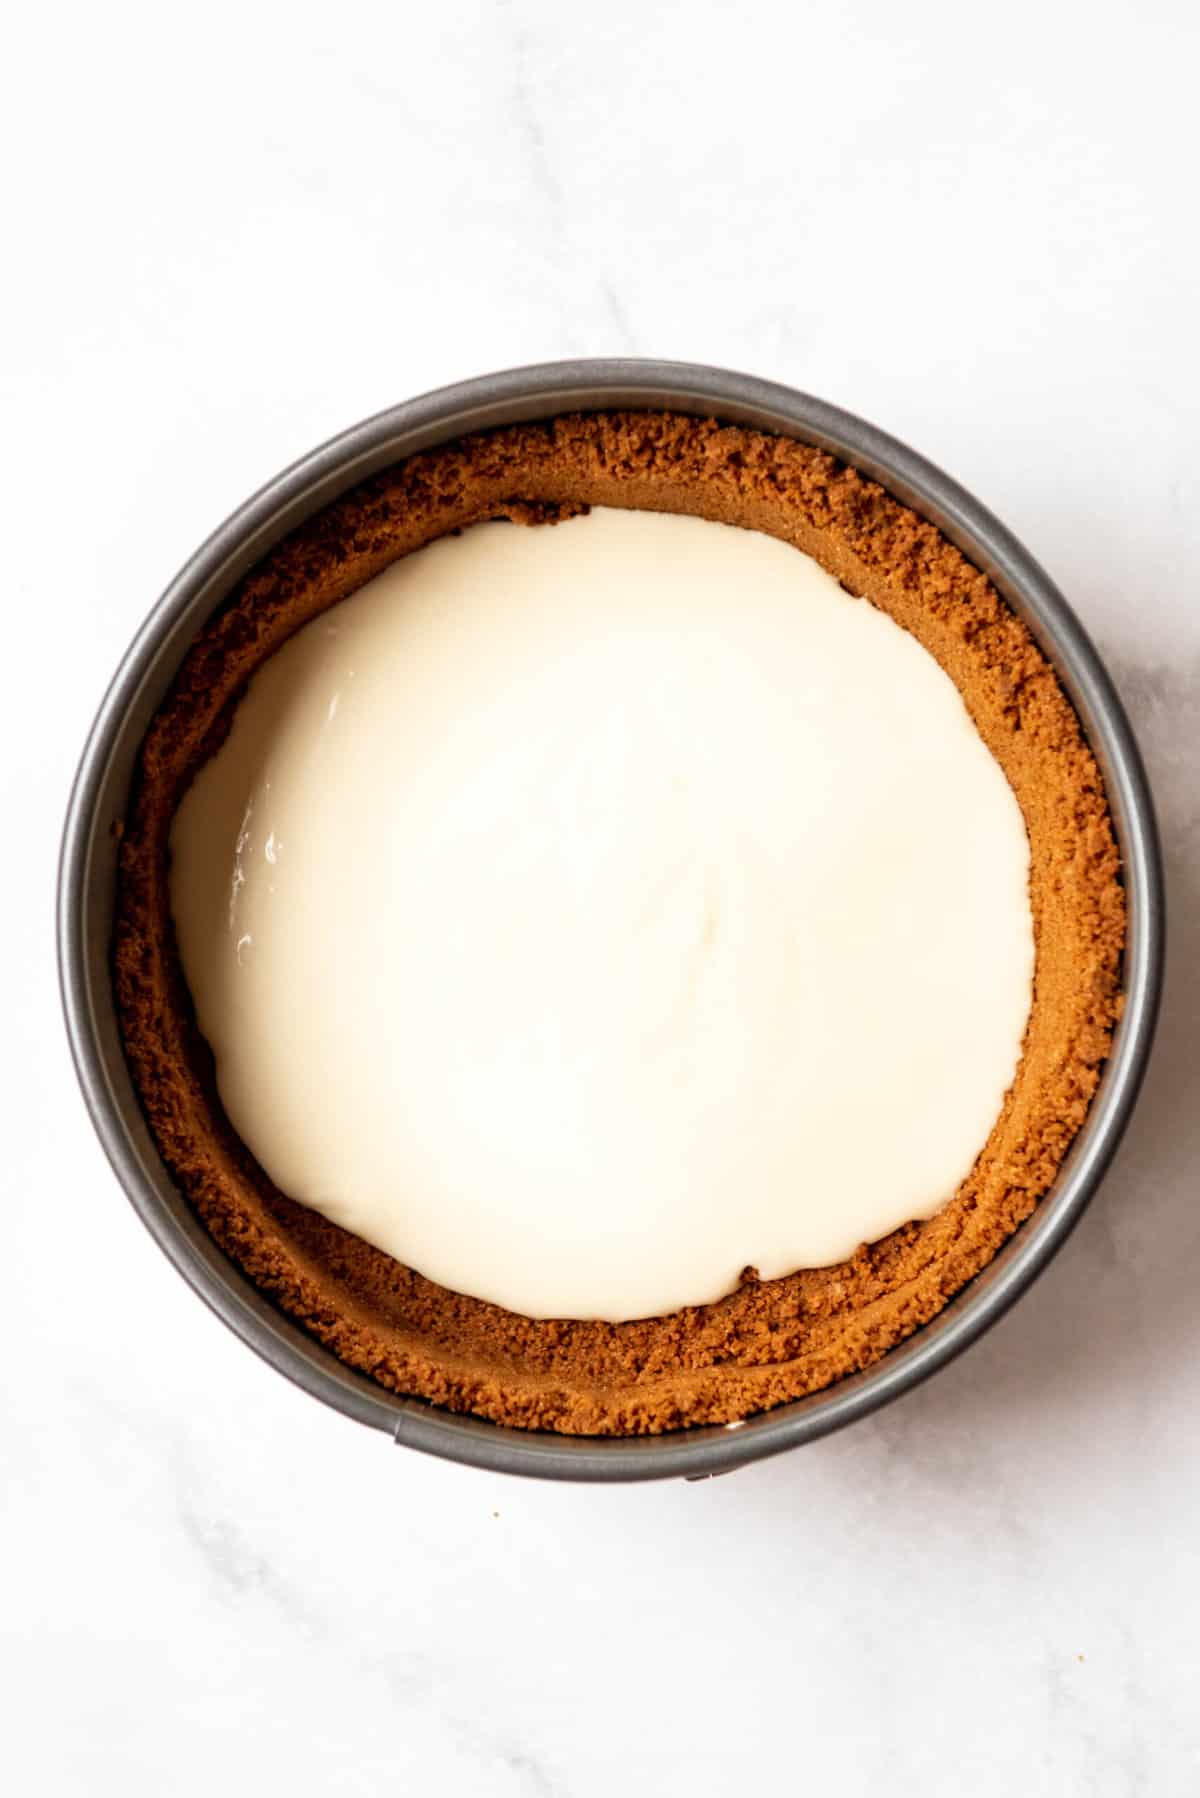 Cheesecake filling in a biscoff crust.